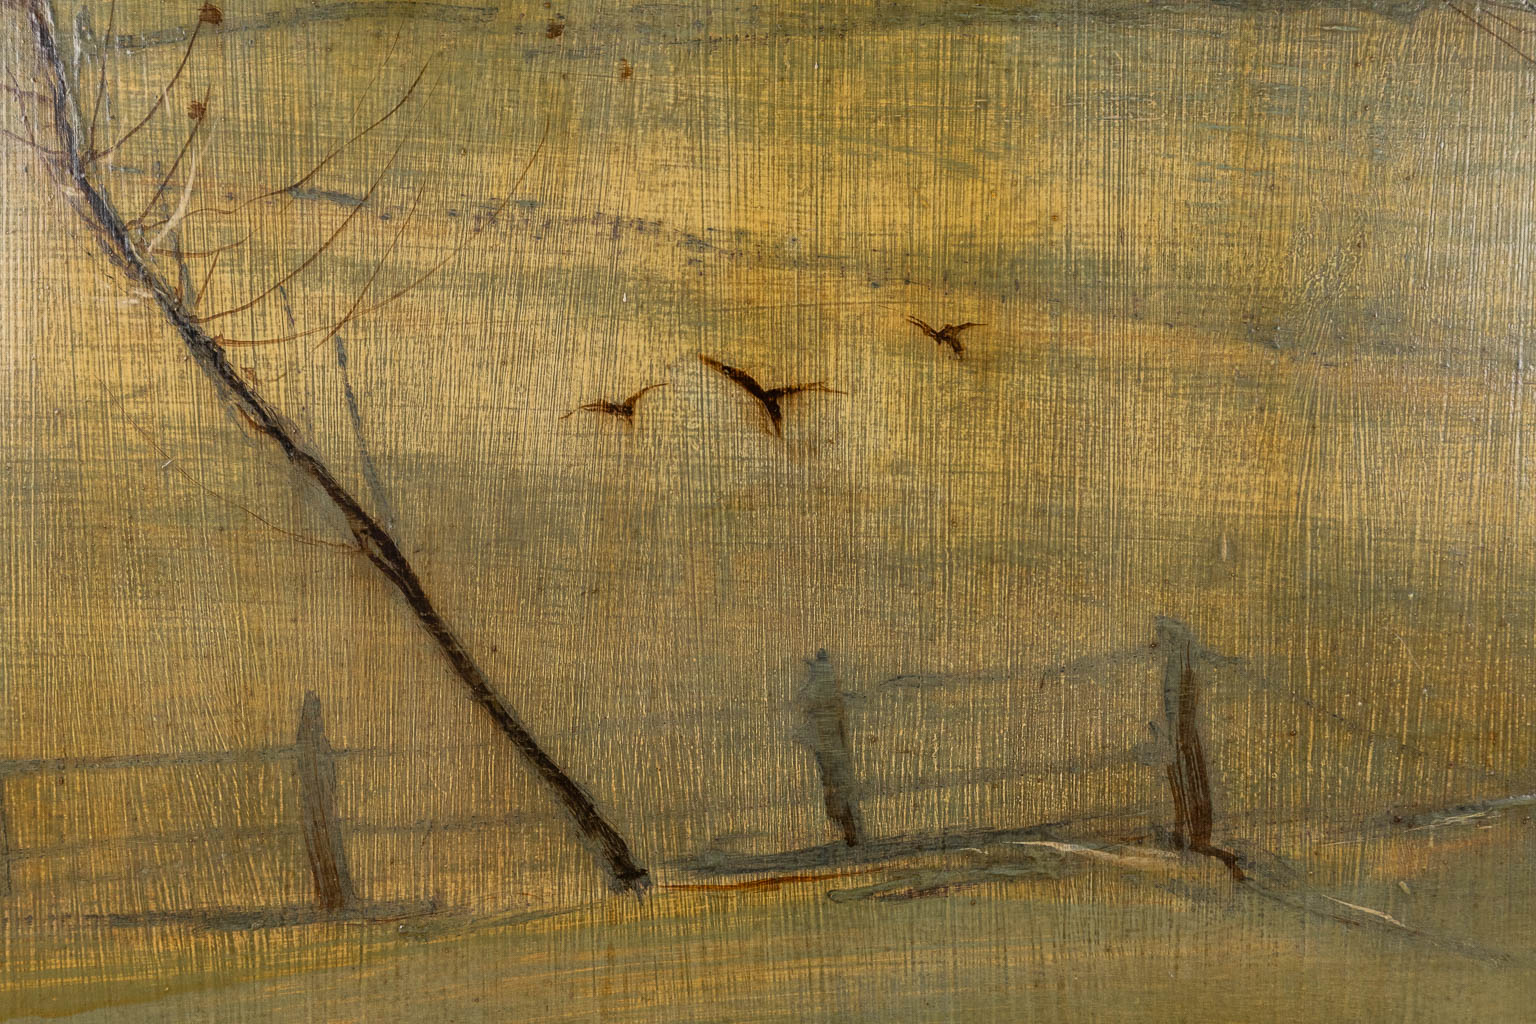 Paul HAGEMANS (1884-1959) 'Winter' olie op paneel. (W:87 x H:118 cm)